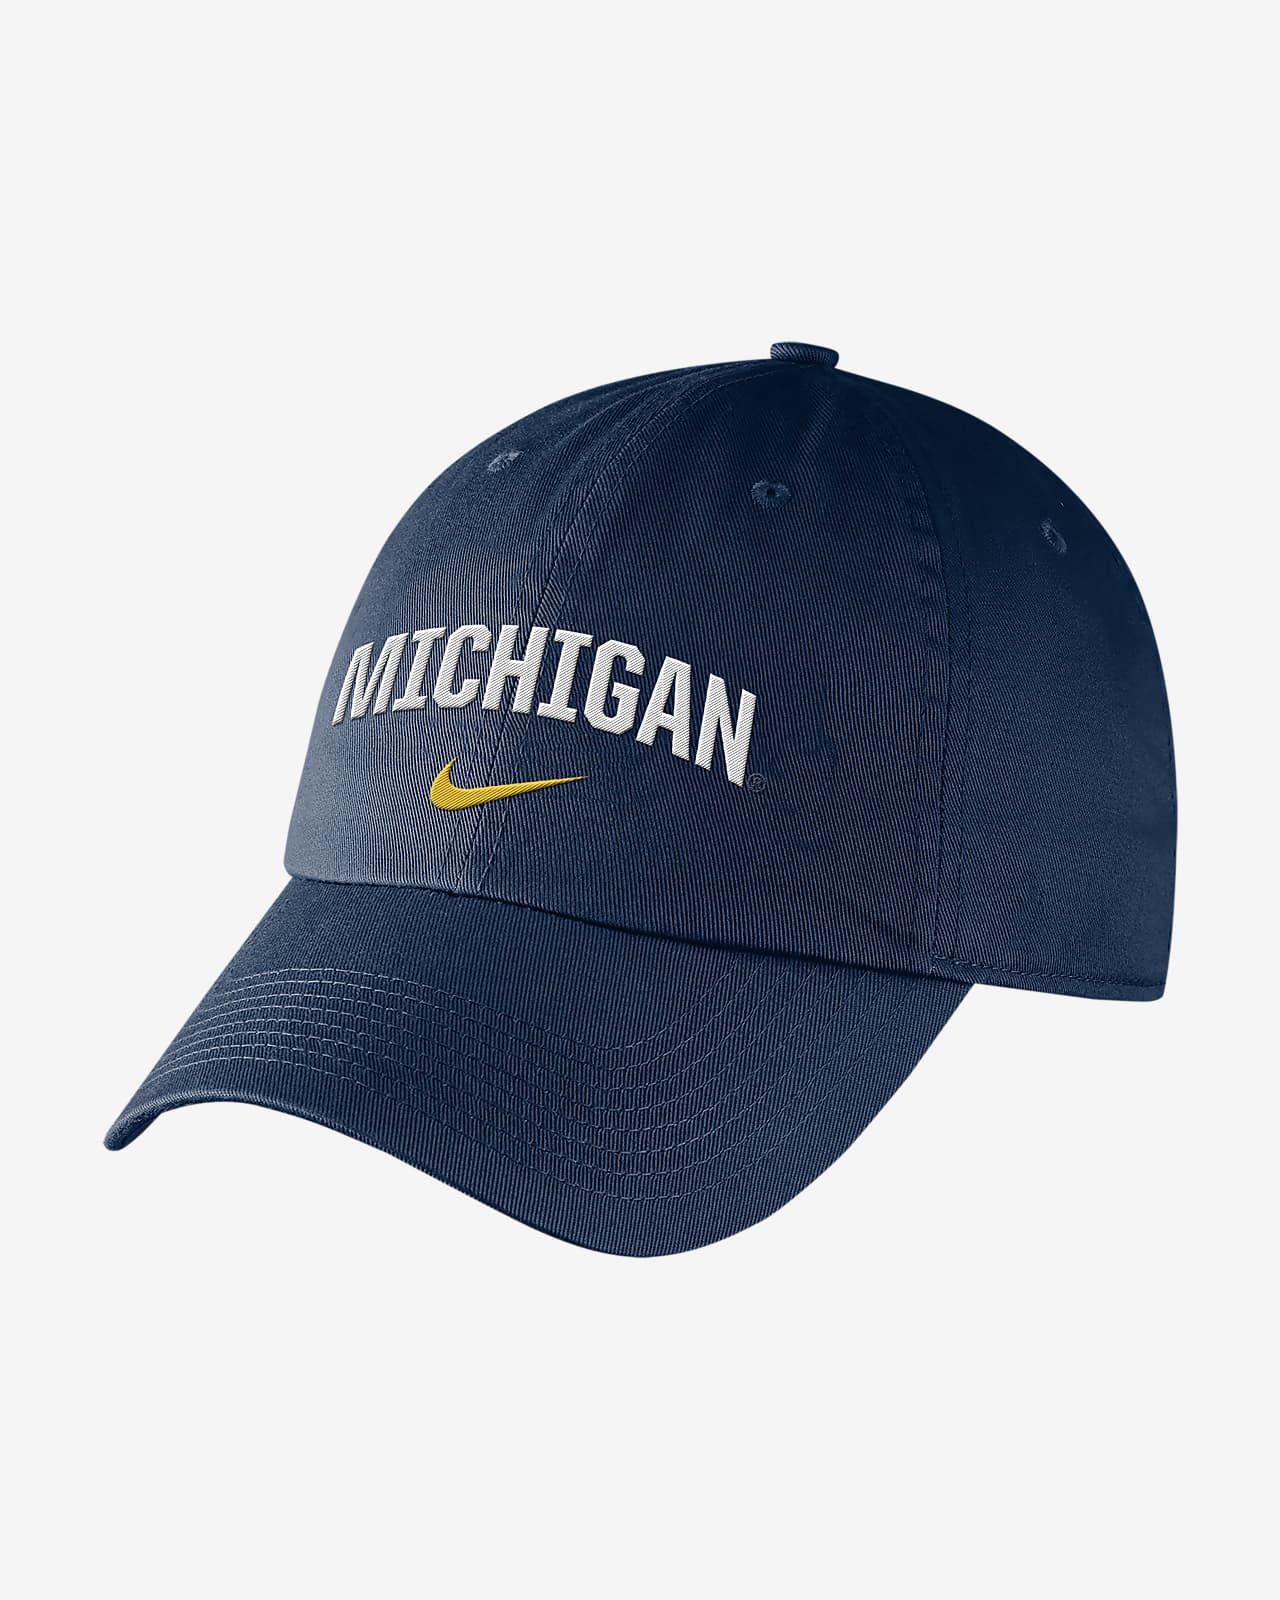 Nike College (Michigan) Hat